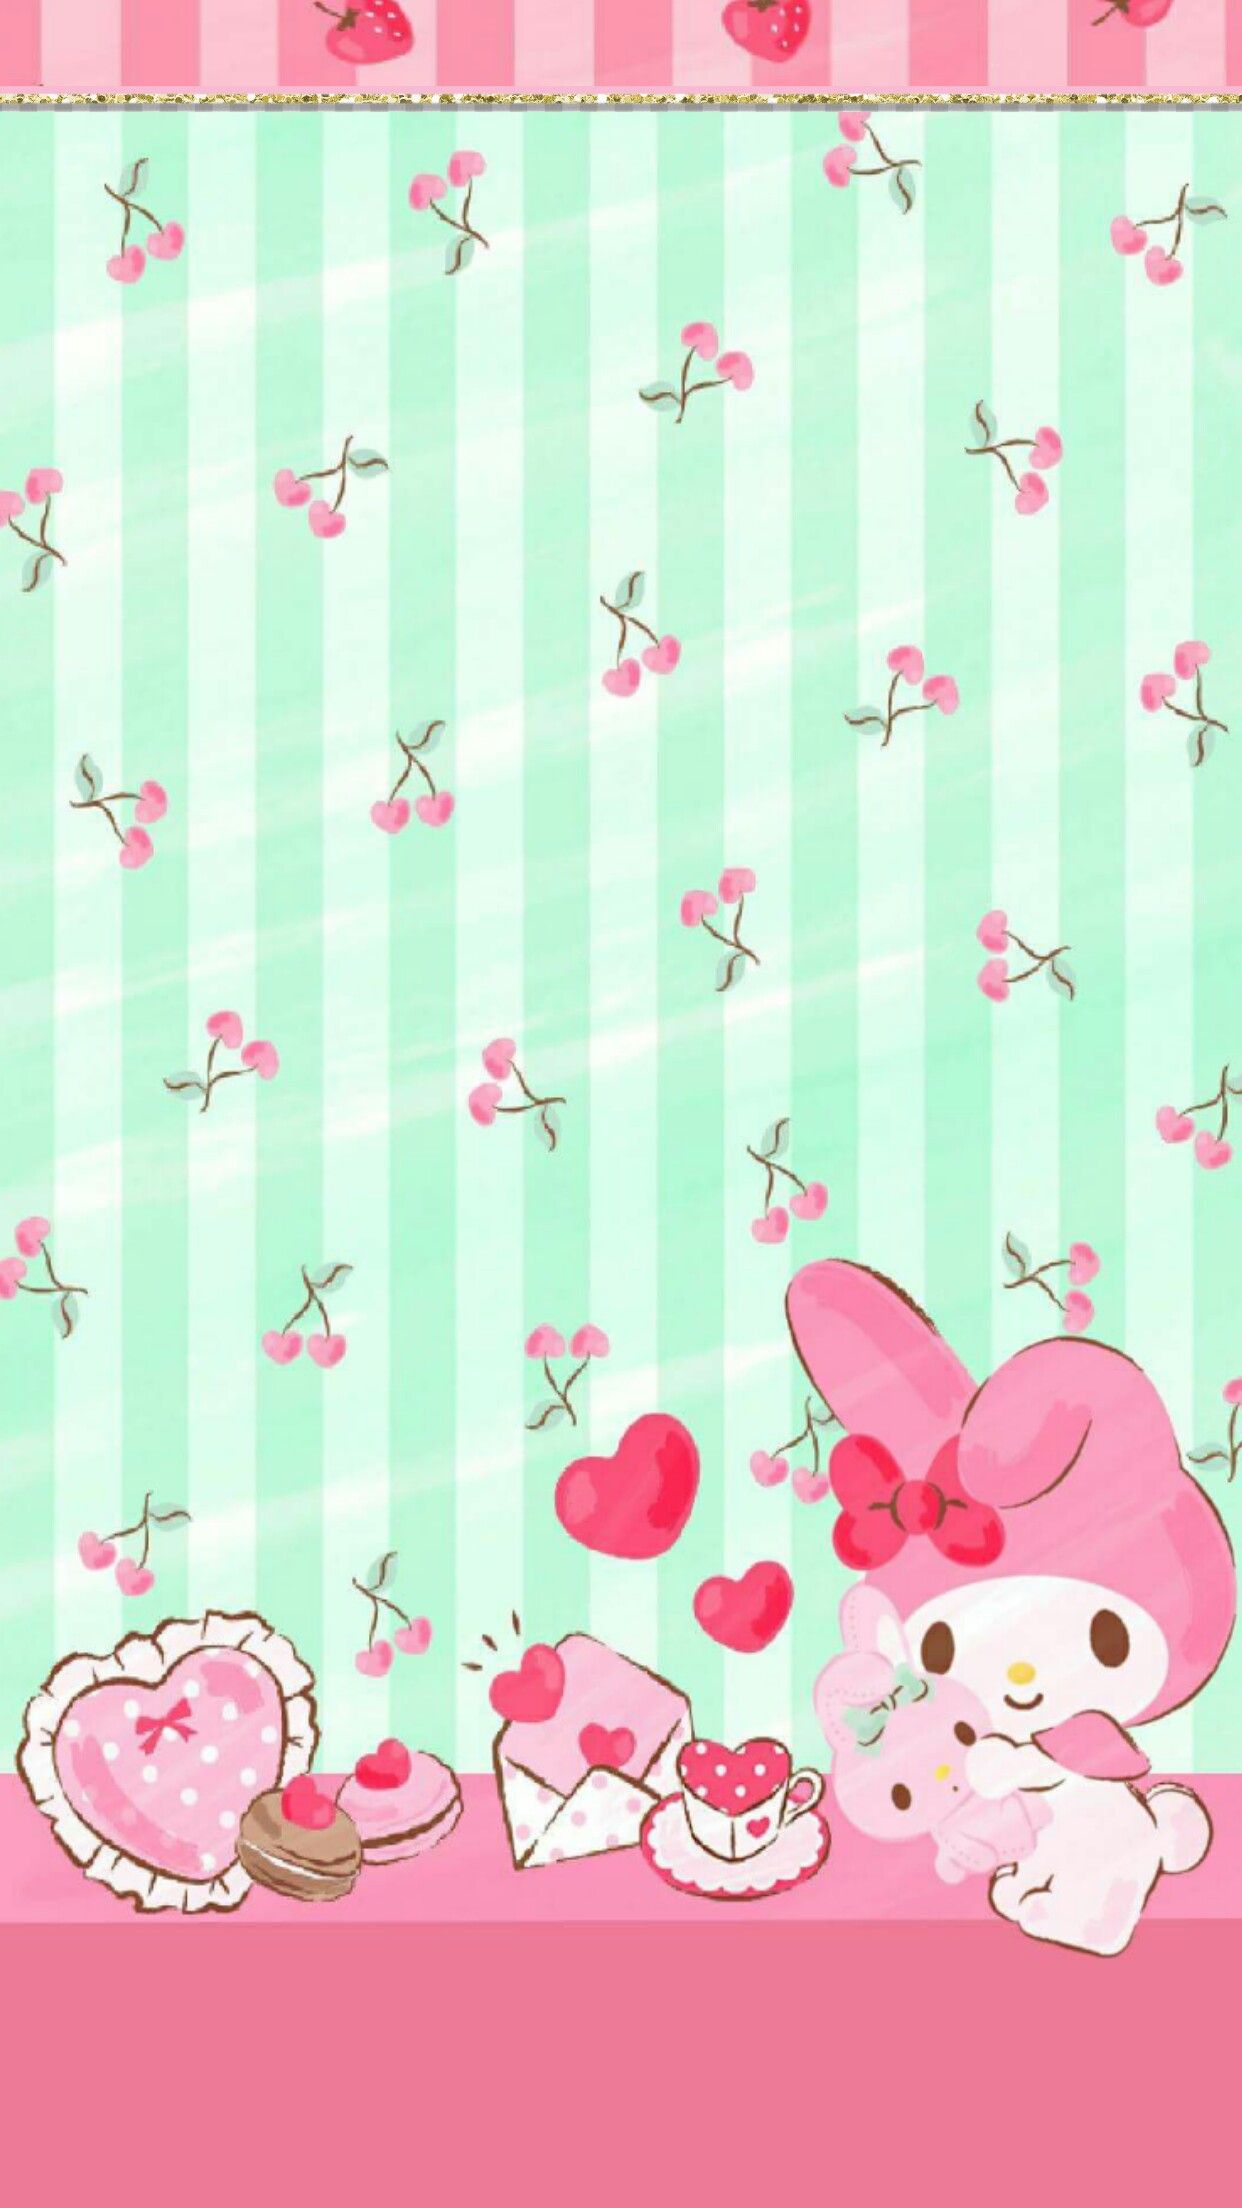 iPhone Wall: Valentine's Day tjn. My melody wallpaper, Sanrio wallpaper, Kitty wallpaper